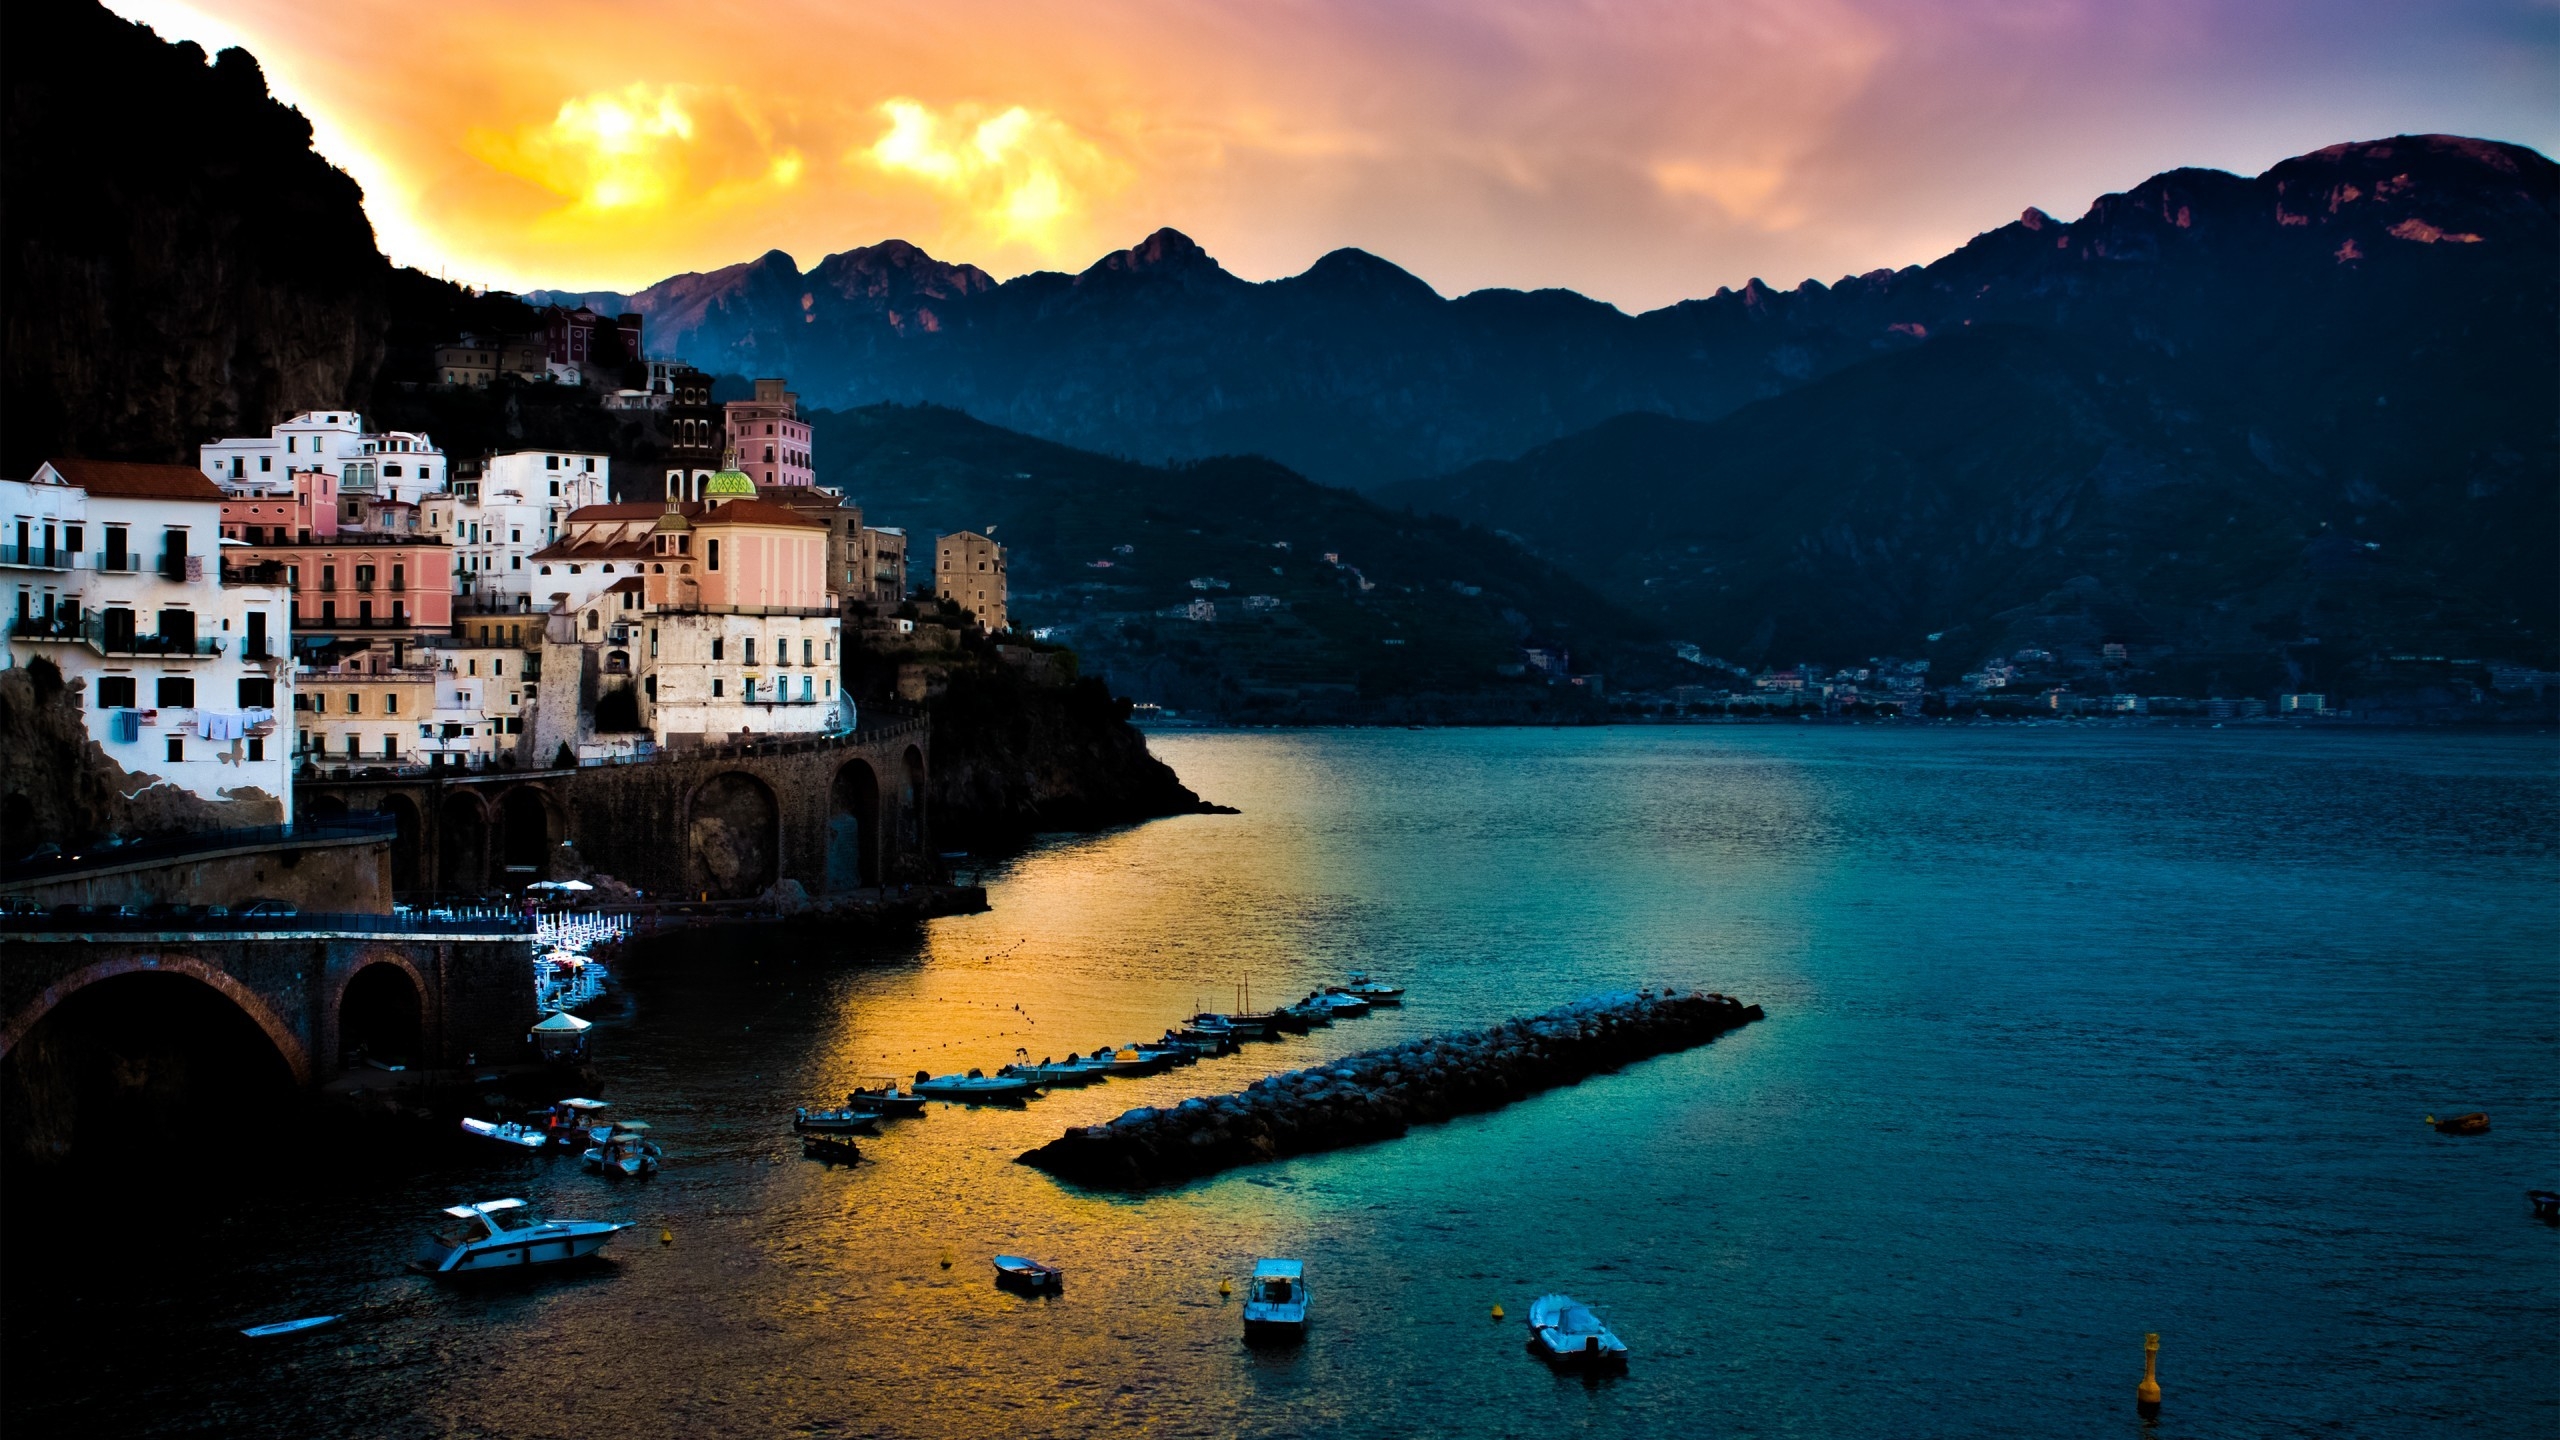 Amalfi Coast Landscape for 2560x1440 HDTV resolution